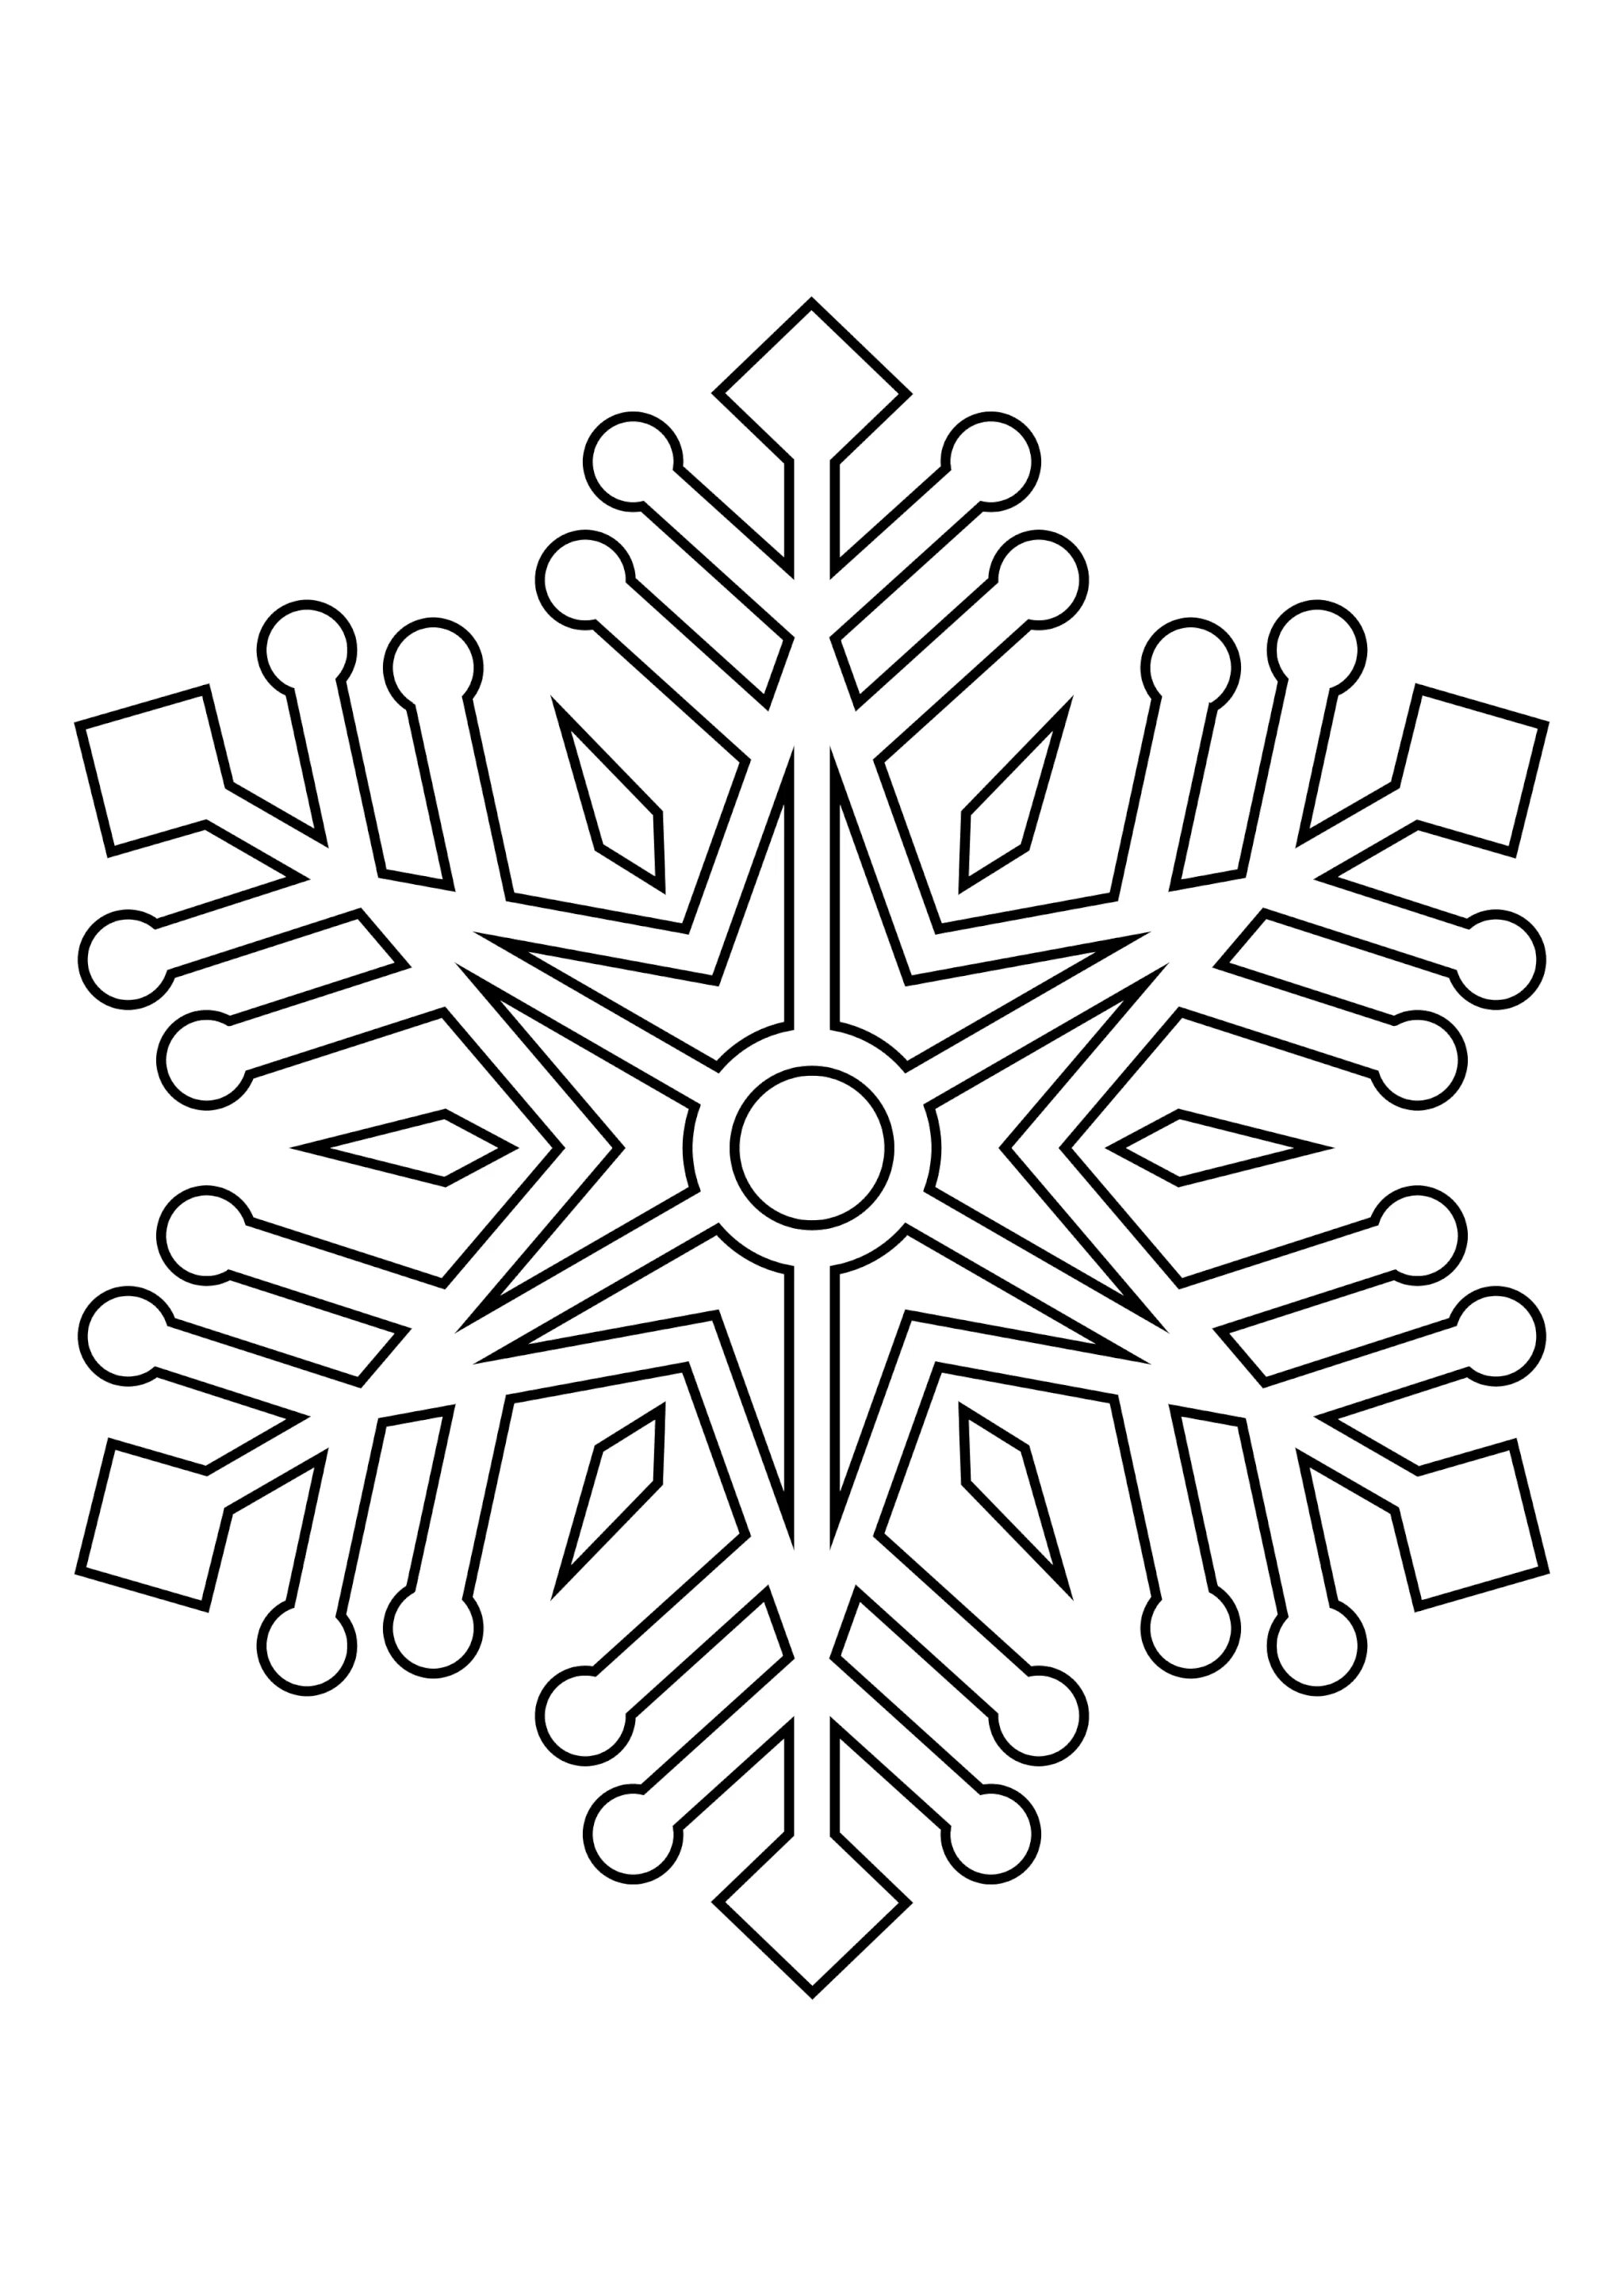 Snowflake pattern #1